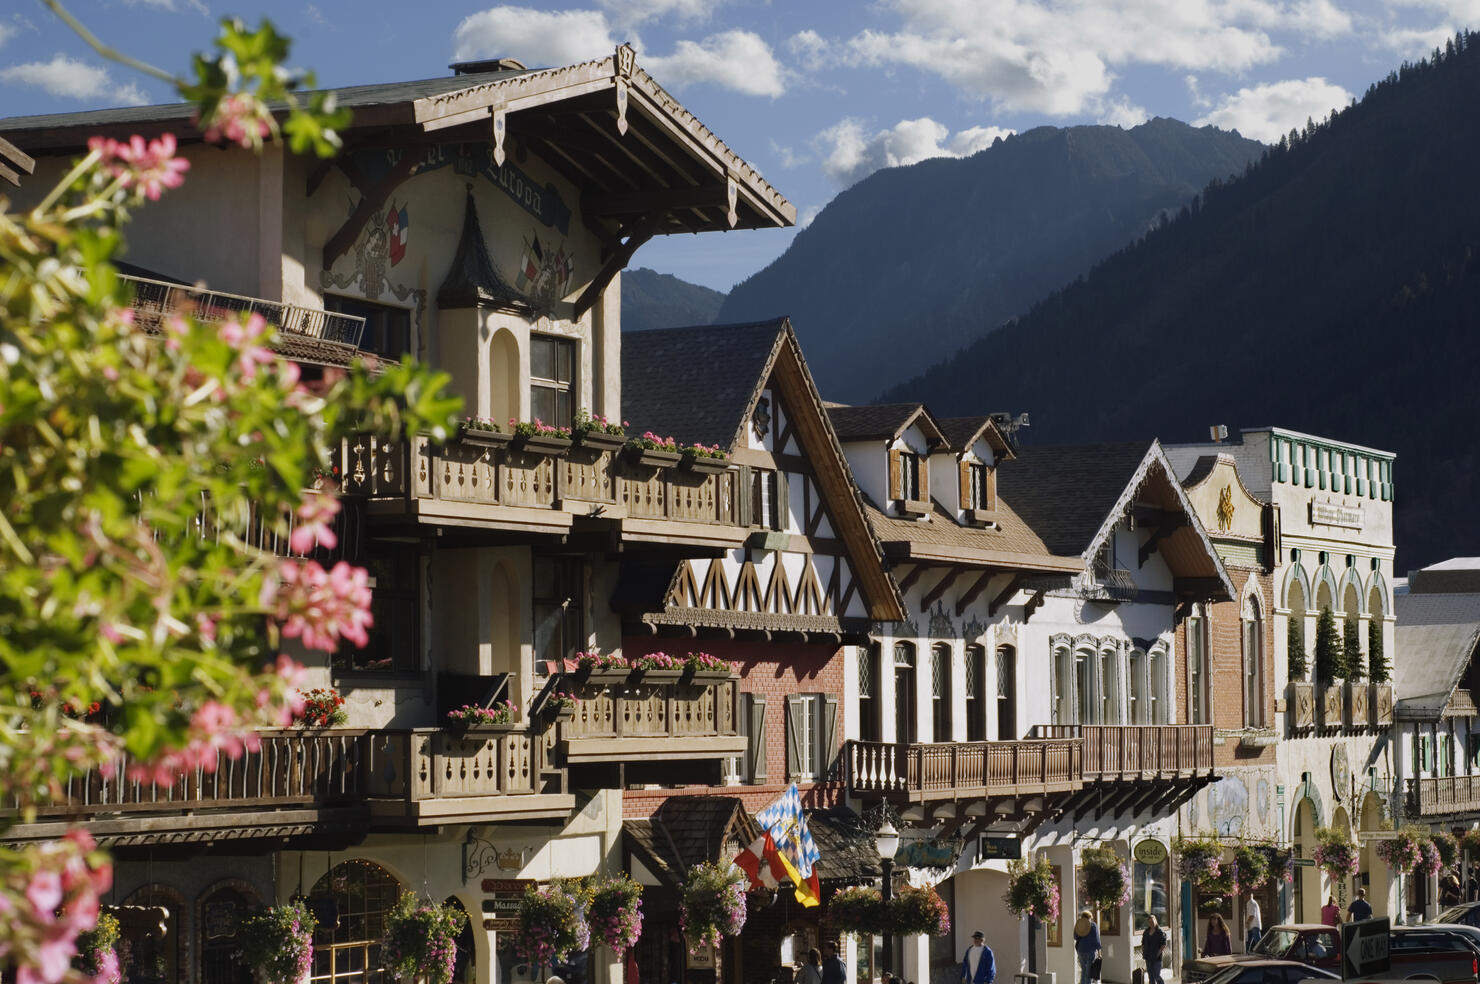 Bavarian style village located near Cascade Mountains